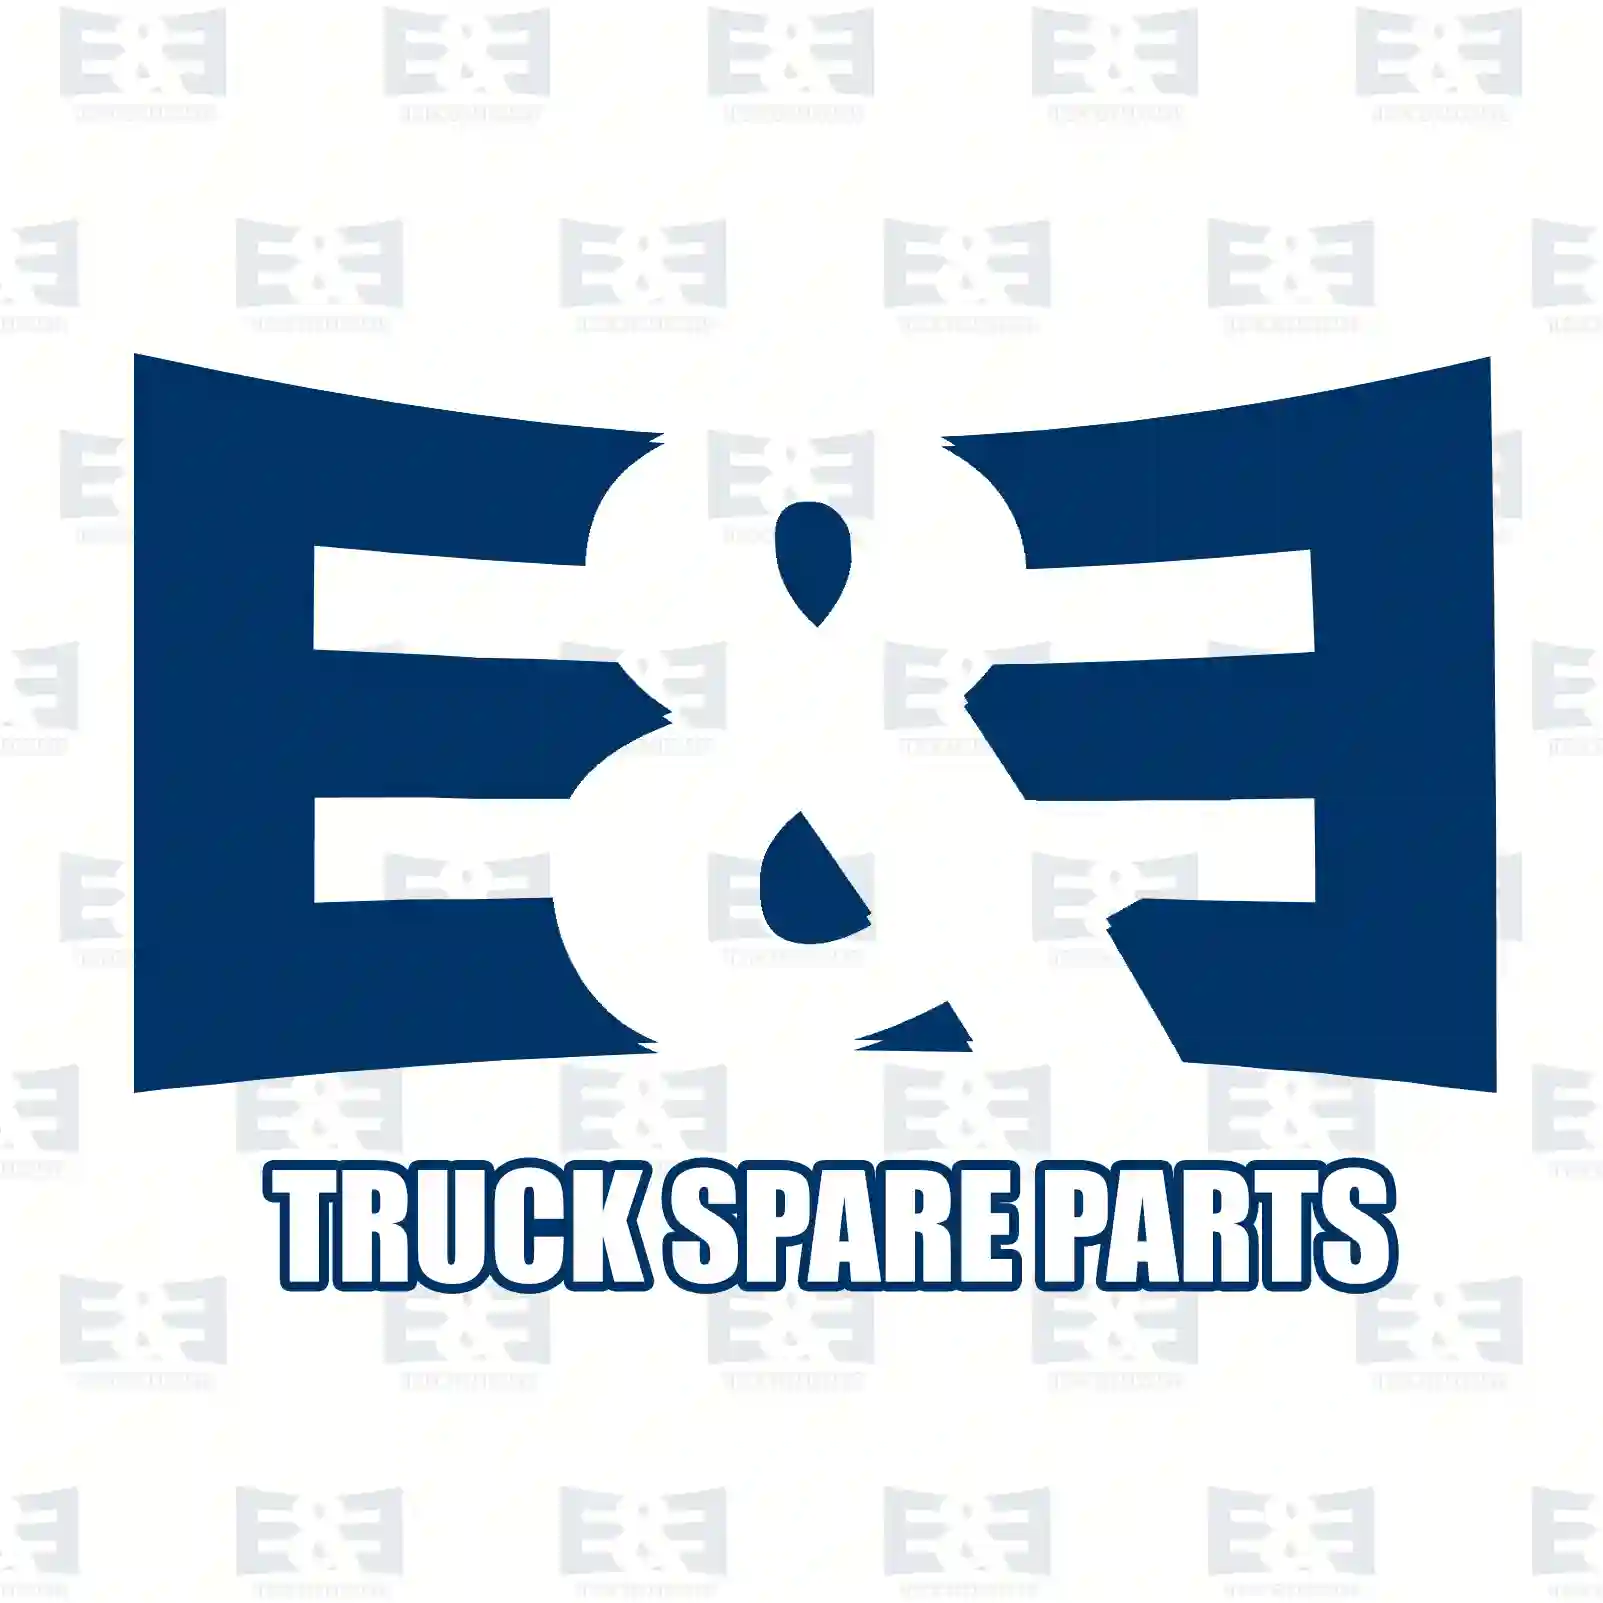 Standard Parts Aluminium washer, EE No 2E2286478 ,  oem no:082028, 55225253, 71752001, 3252267, 007603014104, 1635010060, 082028, 7421108673, 7703062003, 169371, 169391, 21108673, N01384903, N0138493, N0138495, N0138993, N138493 E&E Truck Spare Parts | Truck Spare Parts, Auotomotive Spare Parts